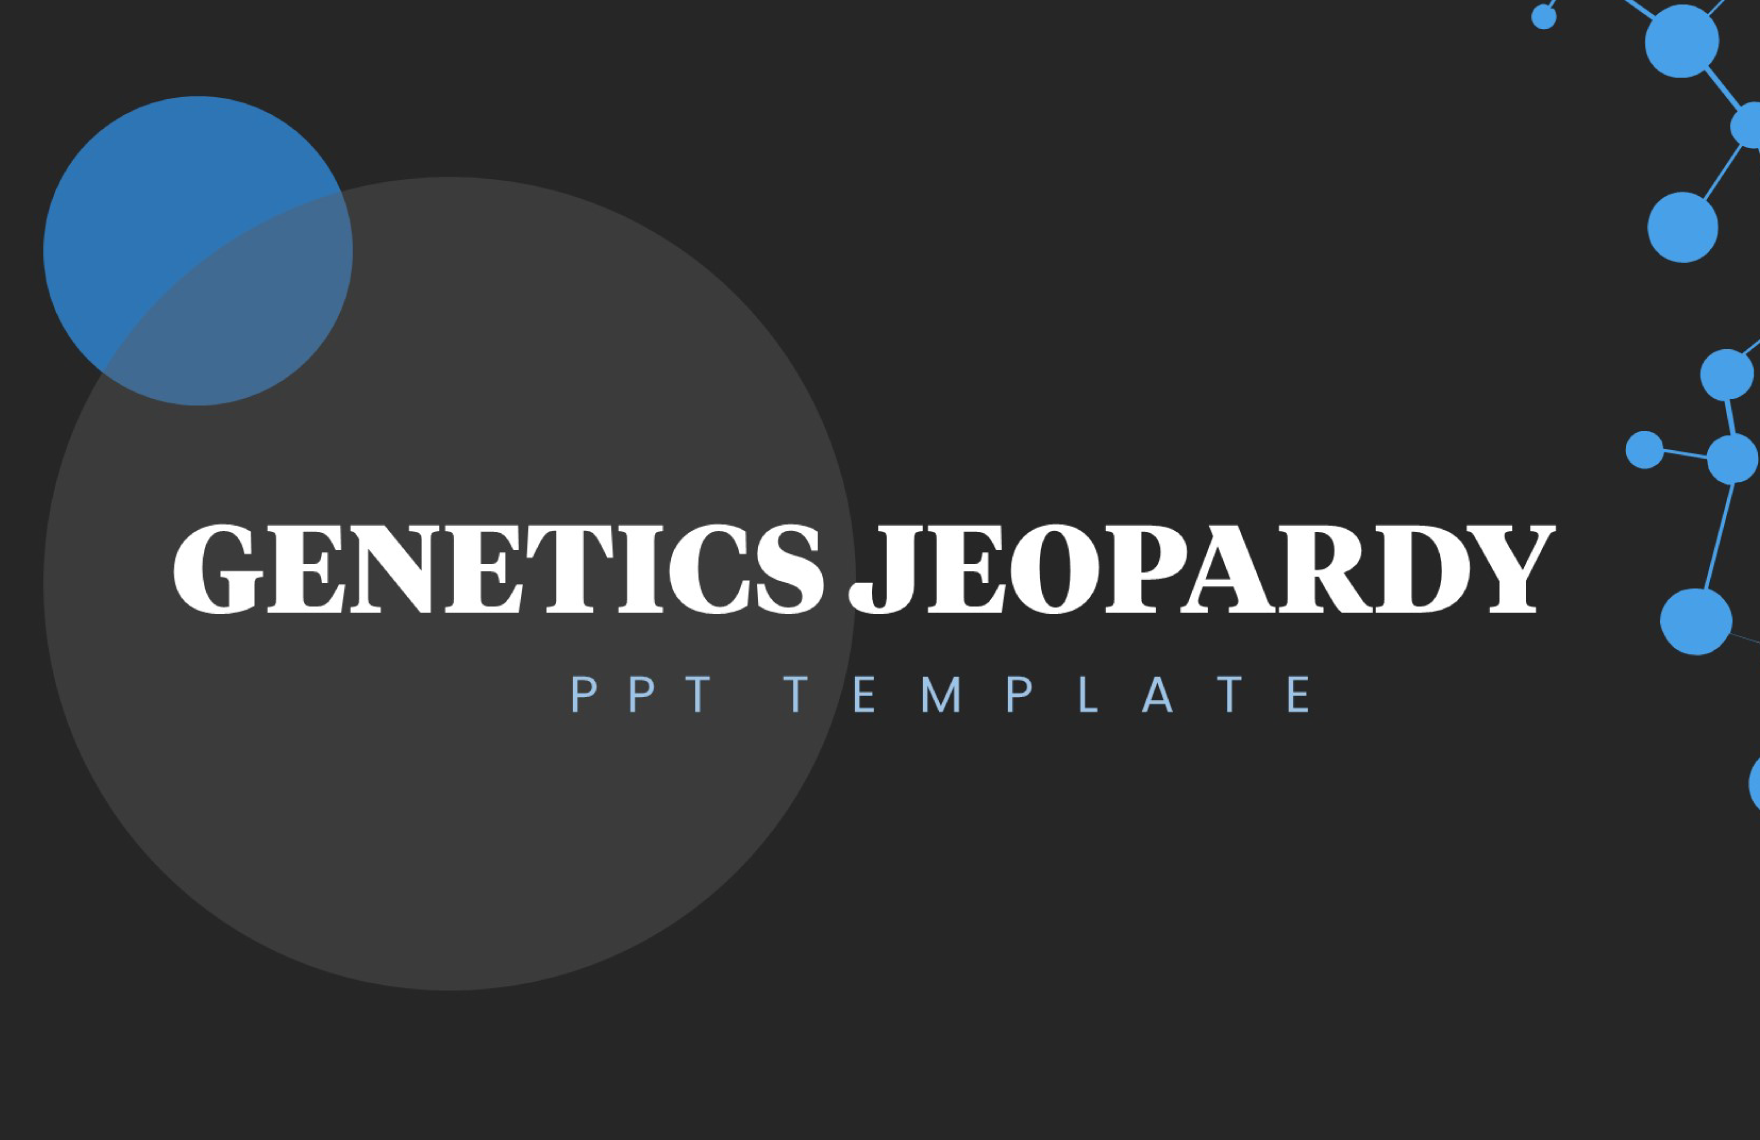 Genetics Jeopardy PPT Template